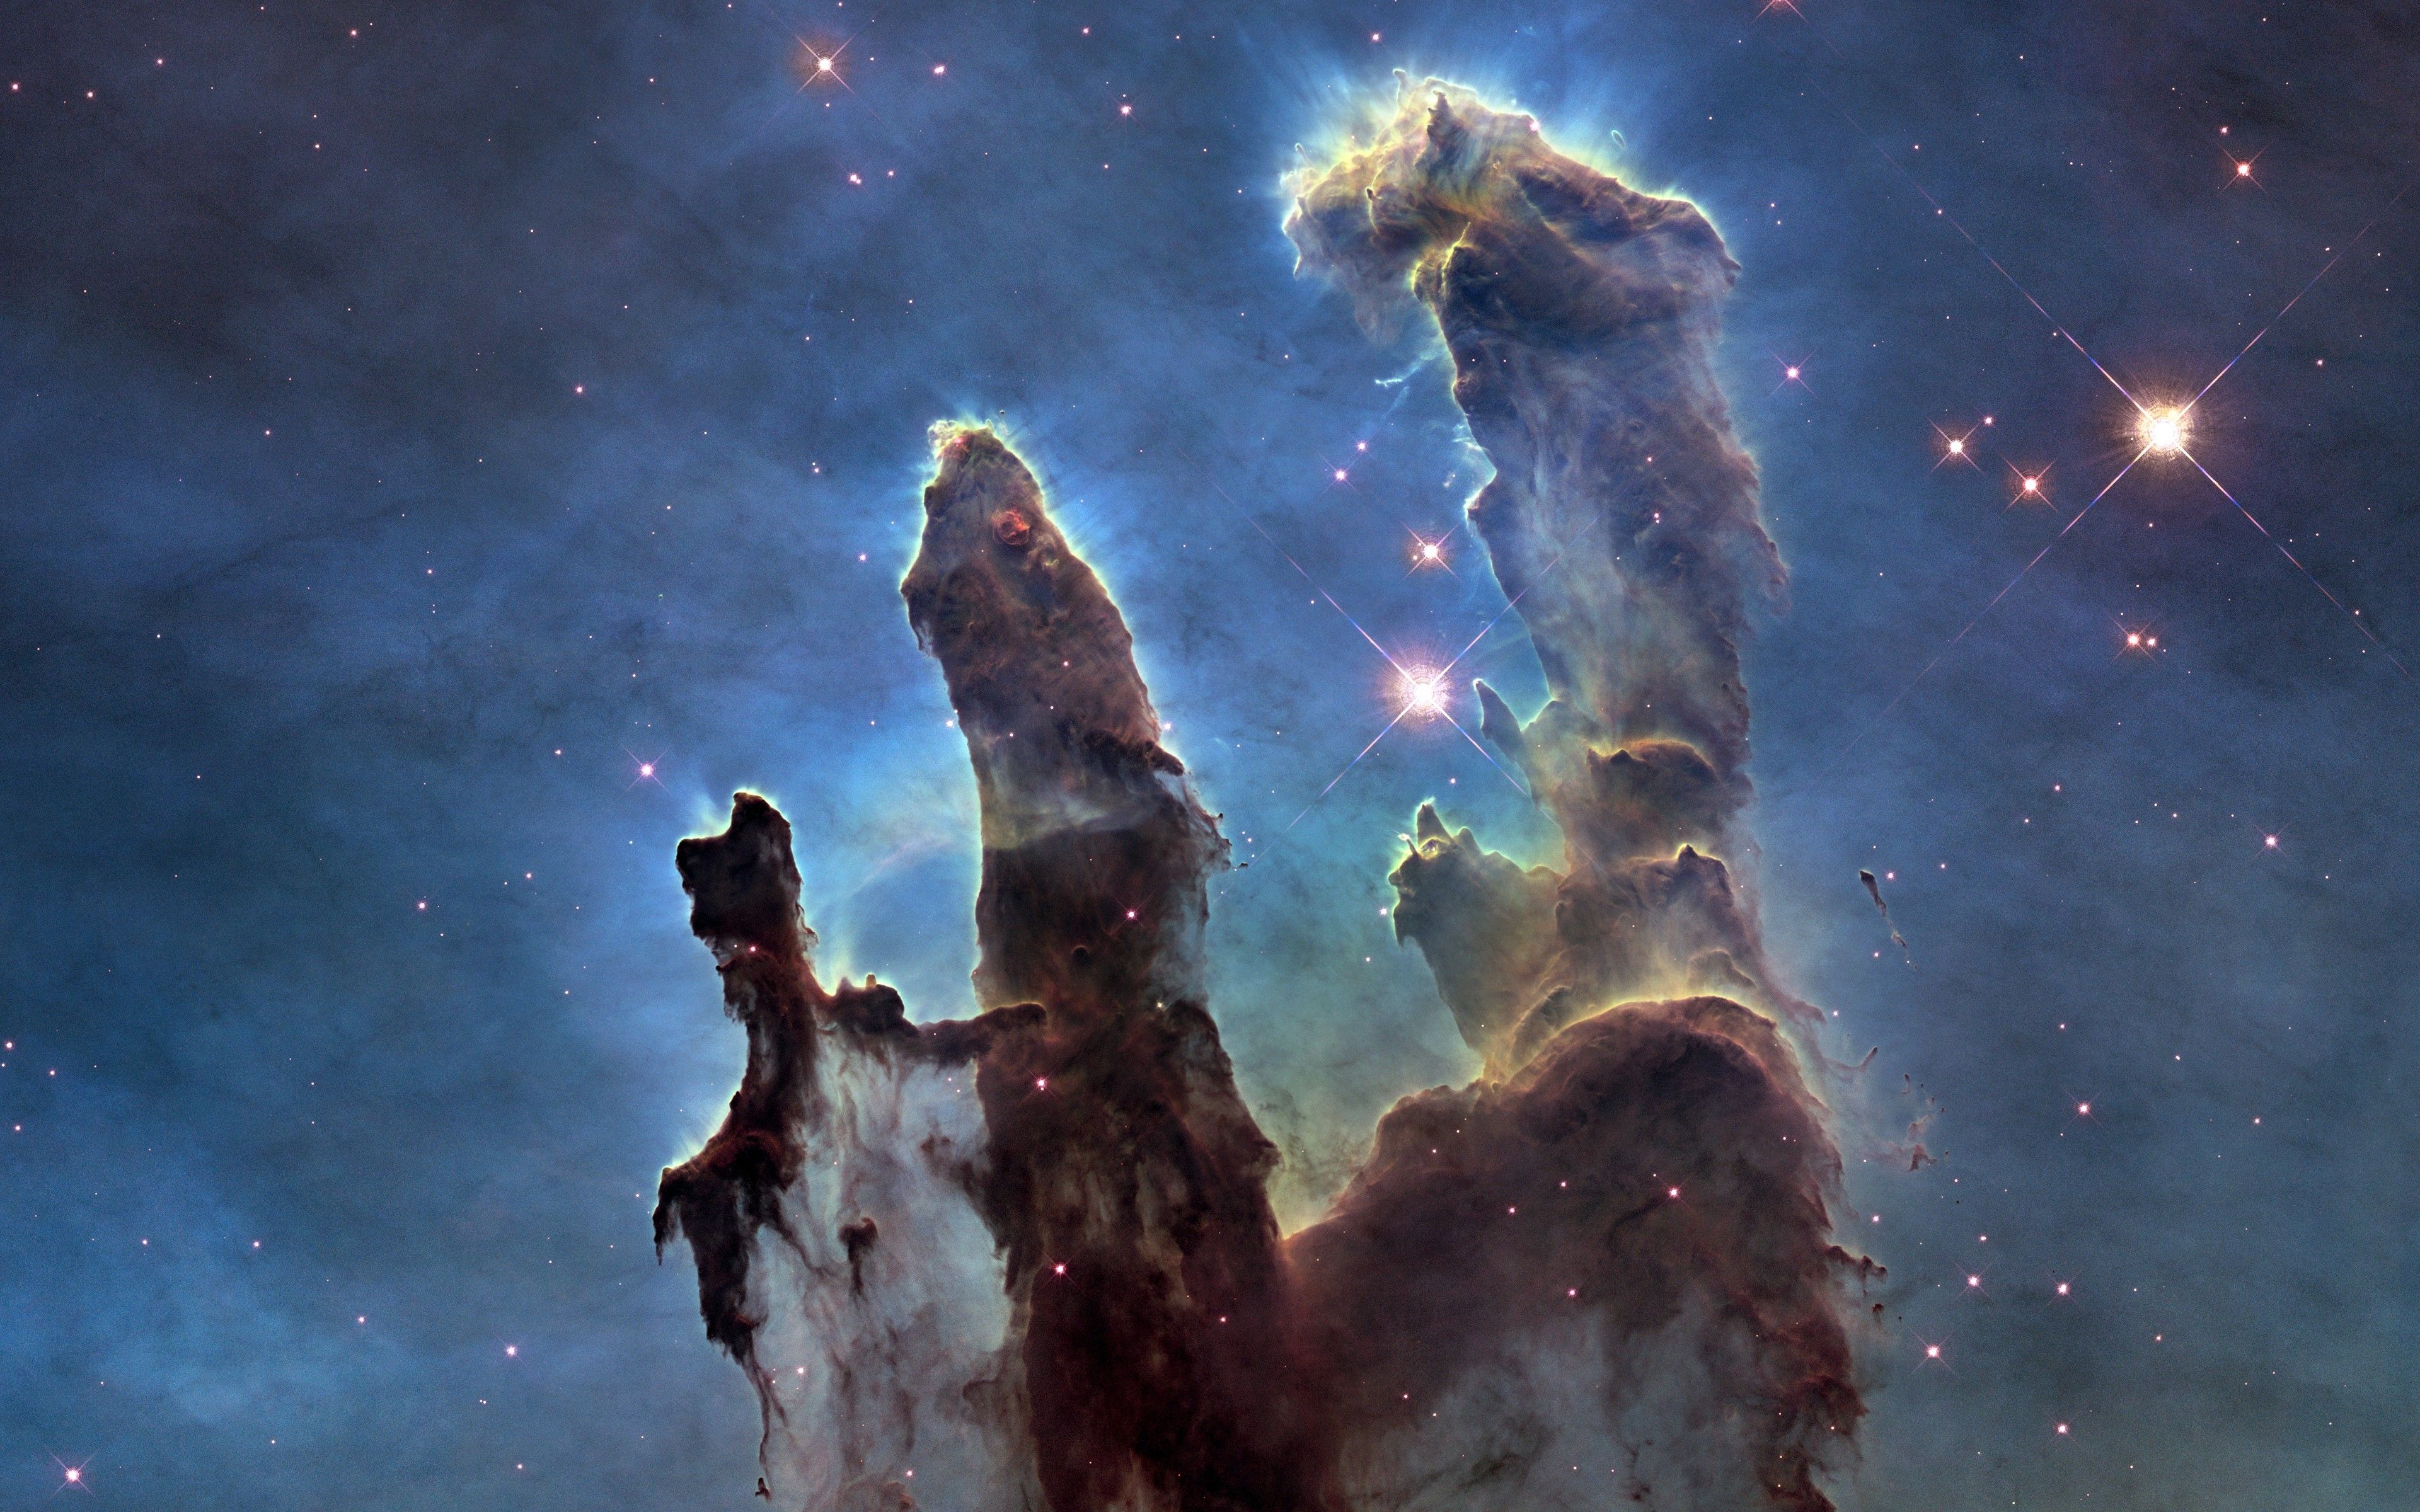 Wallpaper, 3840x2400 px, nebula, Pillars of Creation, space